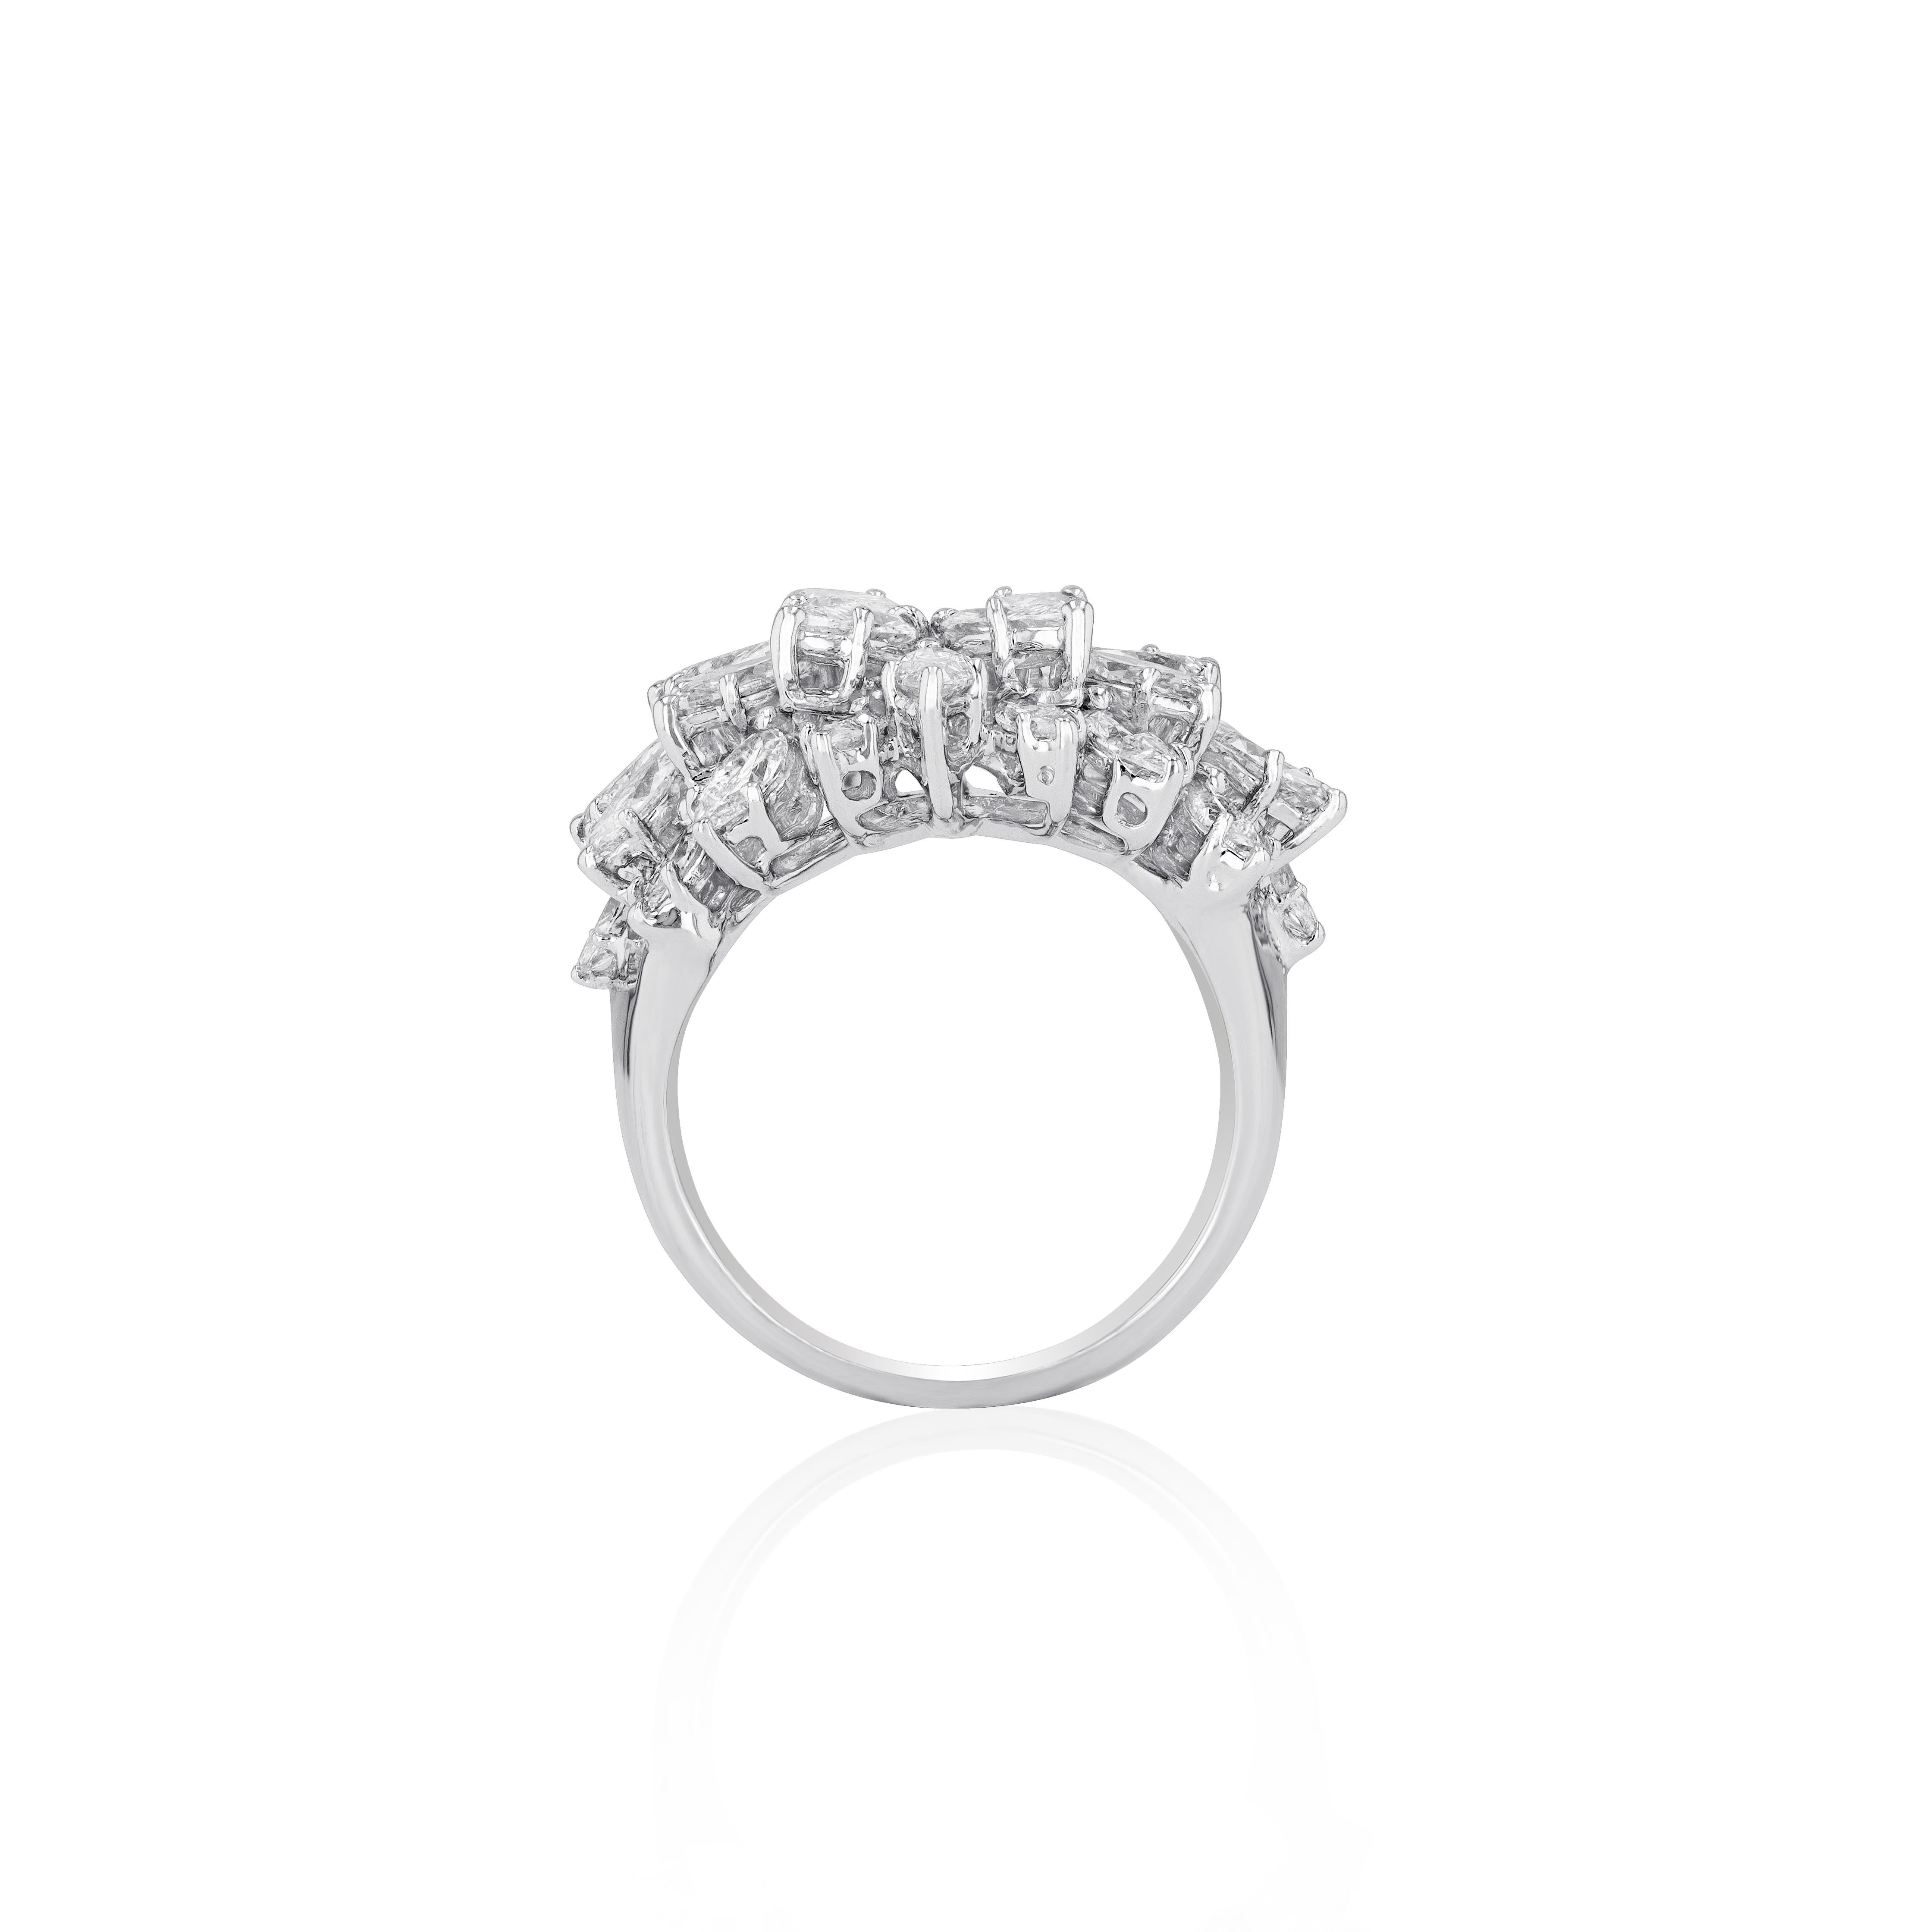 Romantic Amwaj Jewelry 18 Karat White Gold Ring with Diamonds